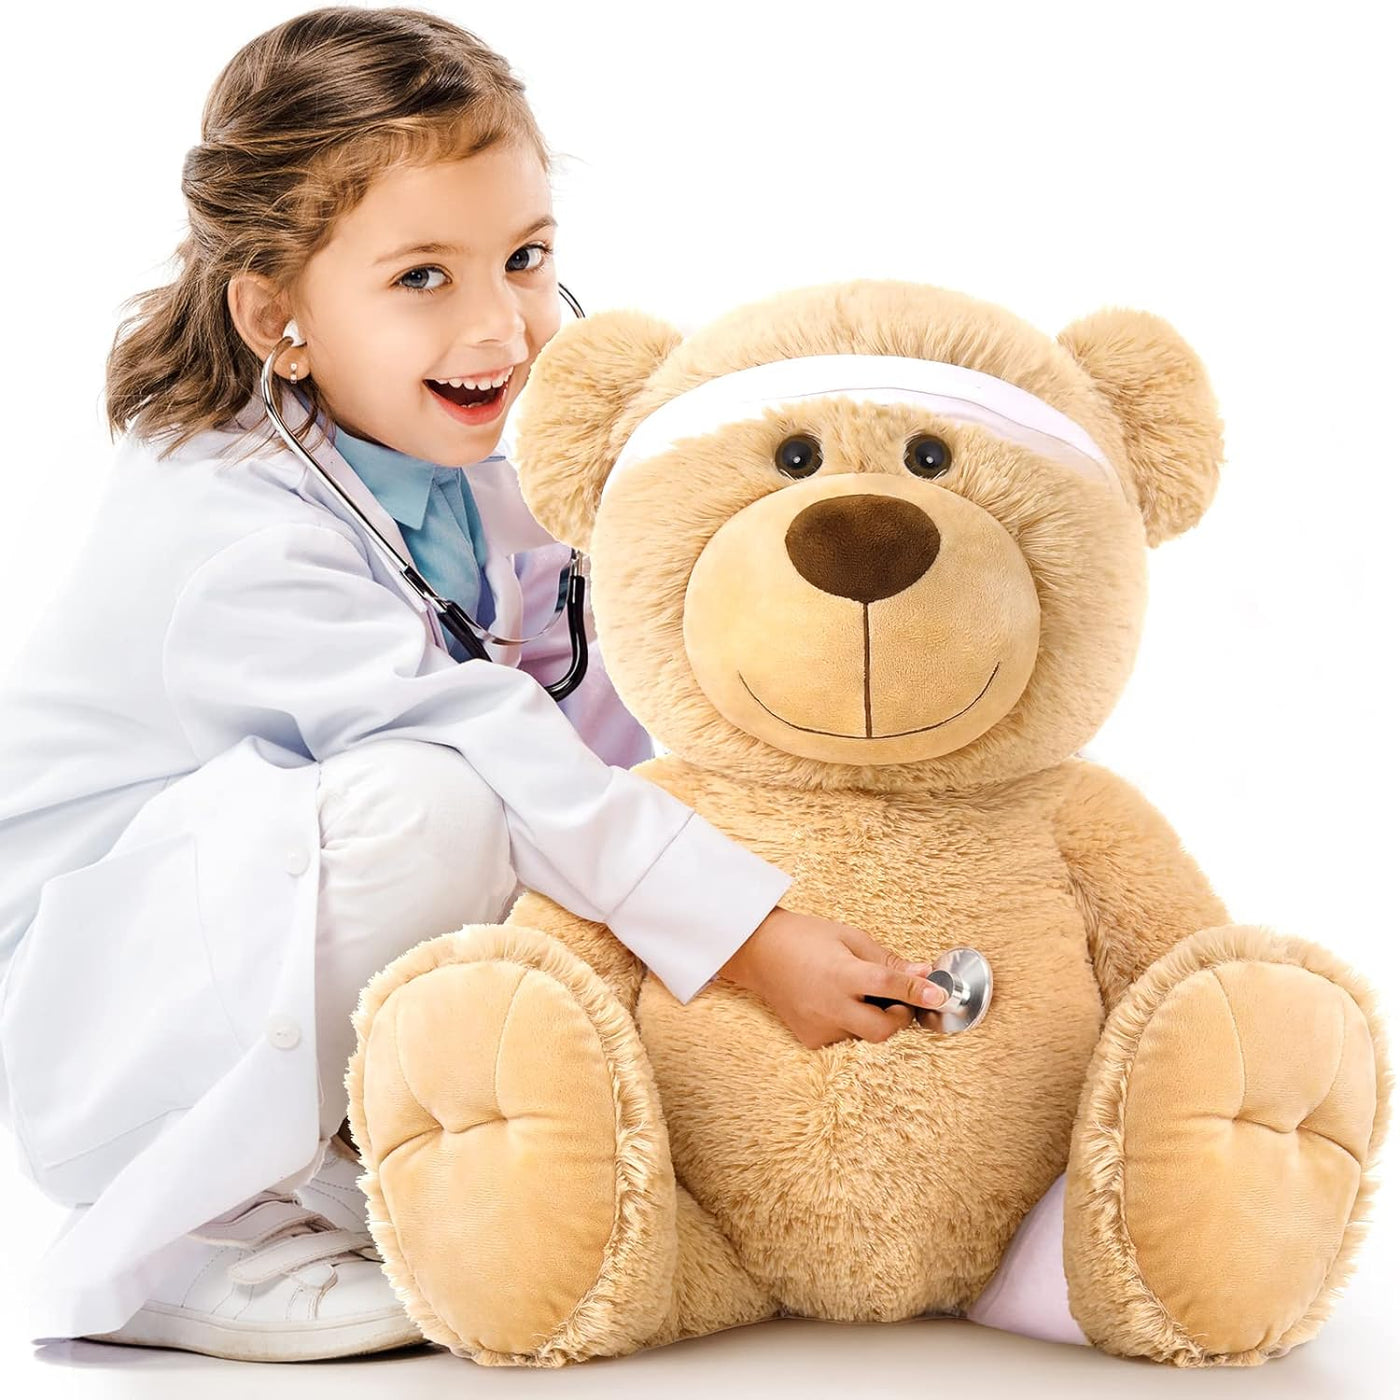 Get Well Soon Teddy Bear Stuffed Animal, 18/29 Inches